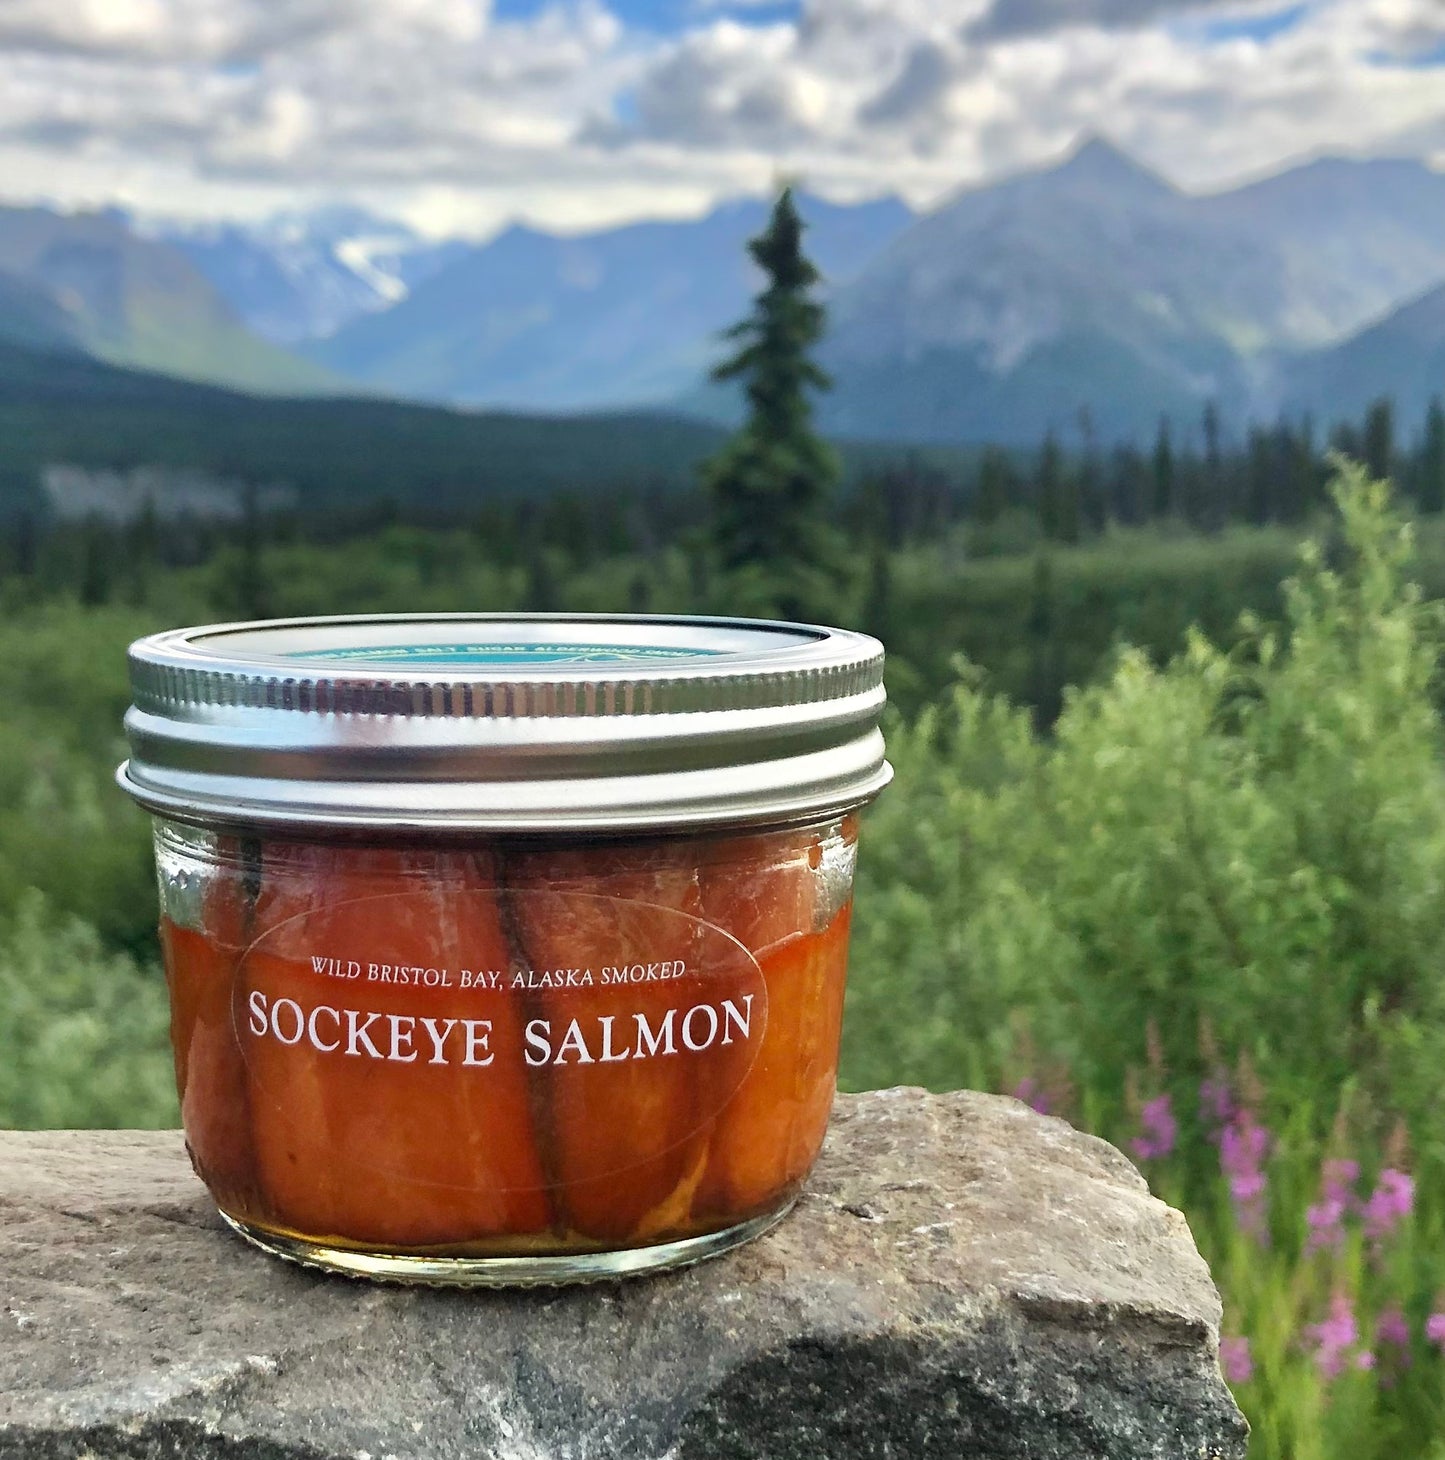 5. Case of smoked sockeye salmon (12 jars) - Free Shipping